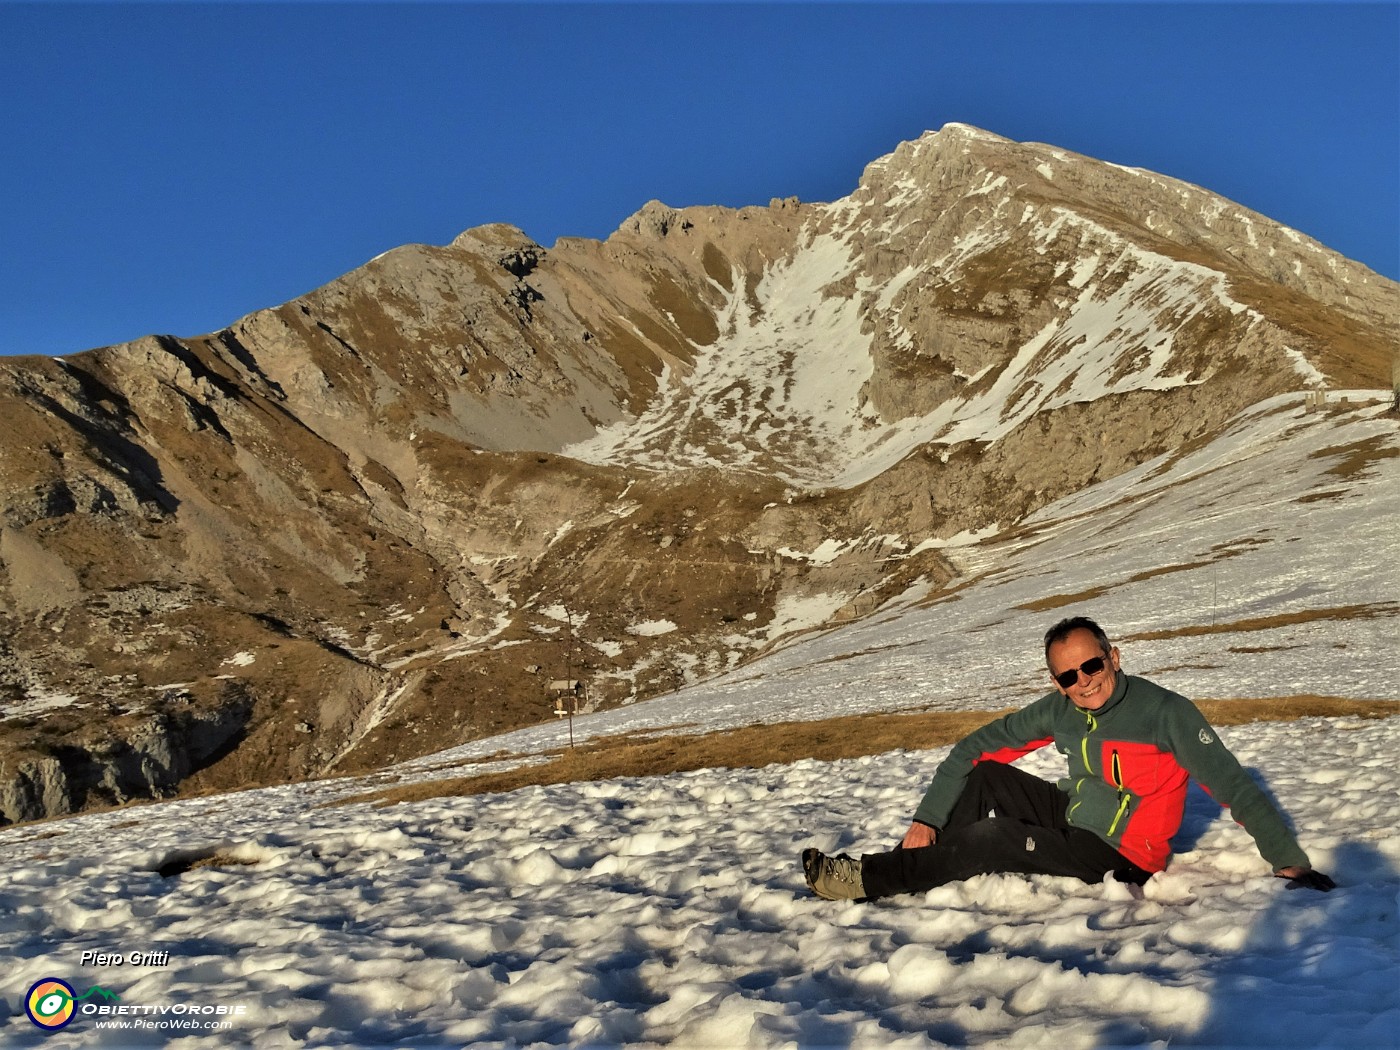 06 Splendida Val di Arera ancora in parte ricoperta da neve baciata dal sole .JPG